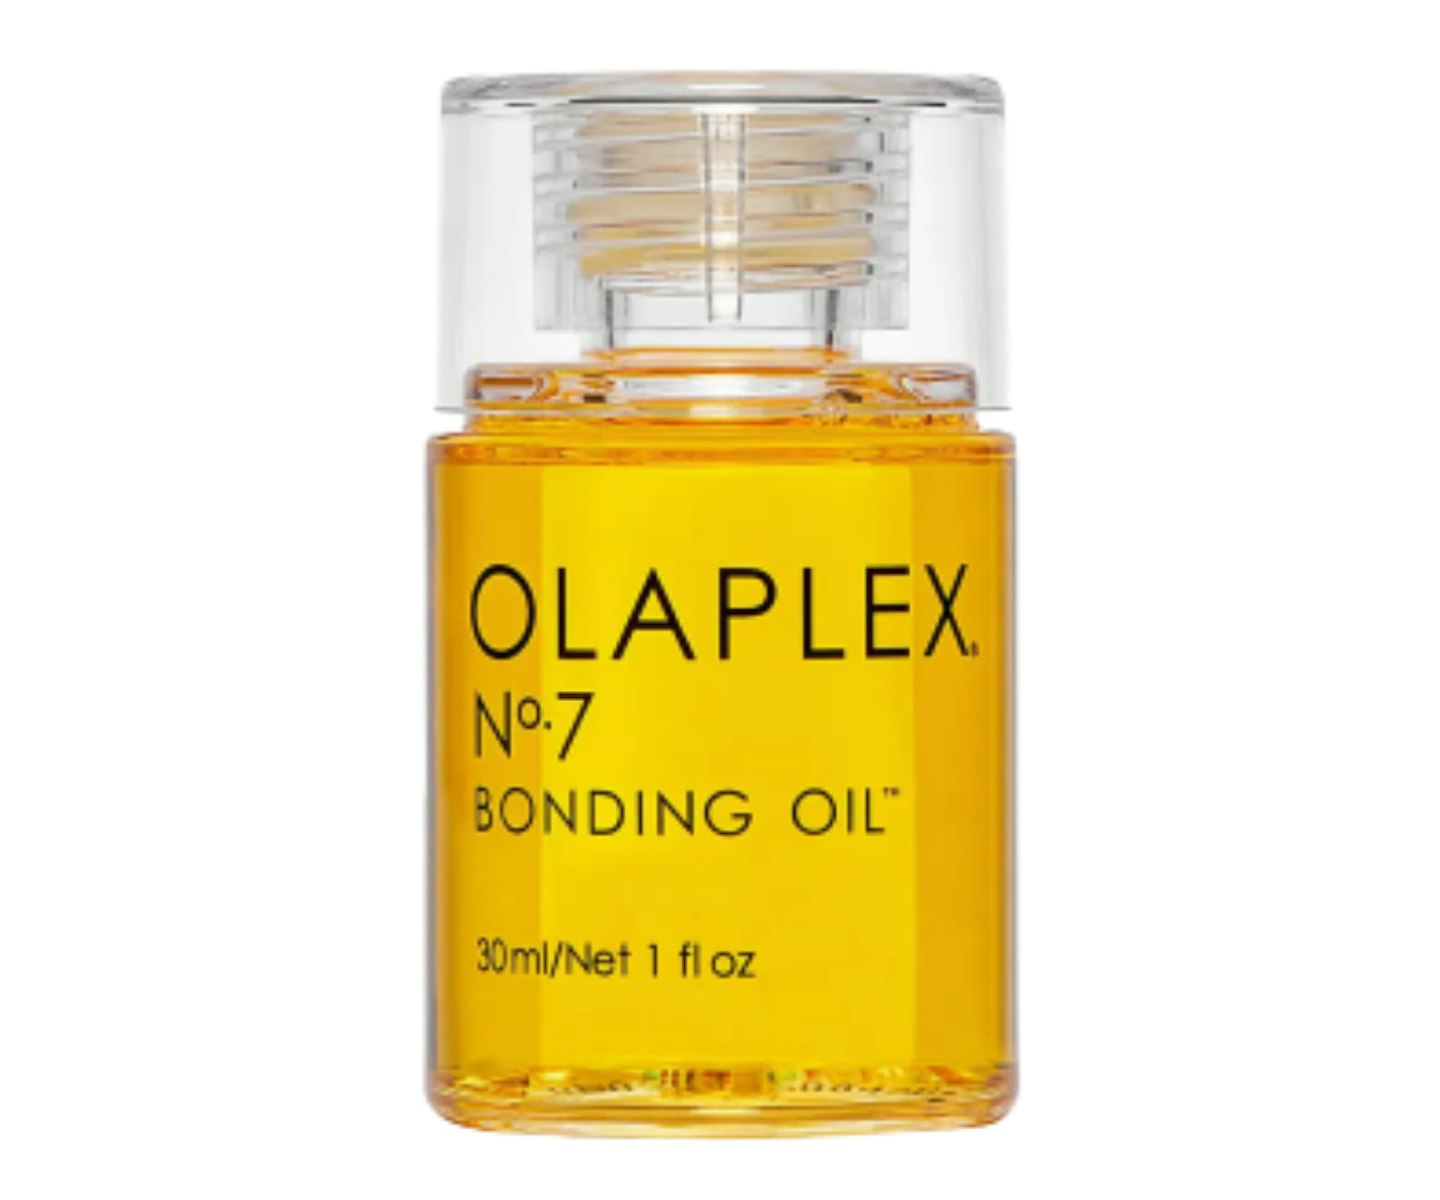 A picture of the Olaplex No7 Bonding Oil